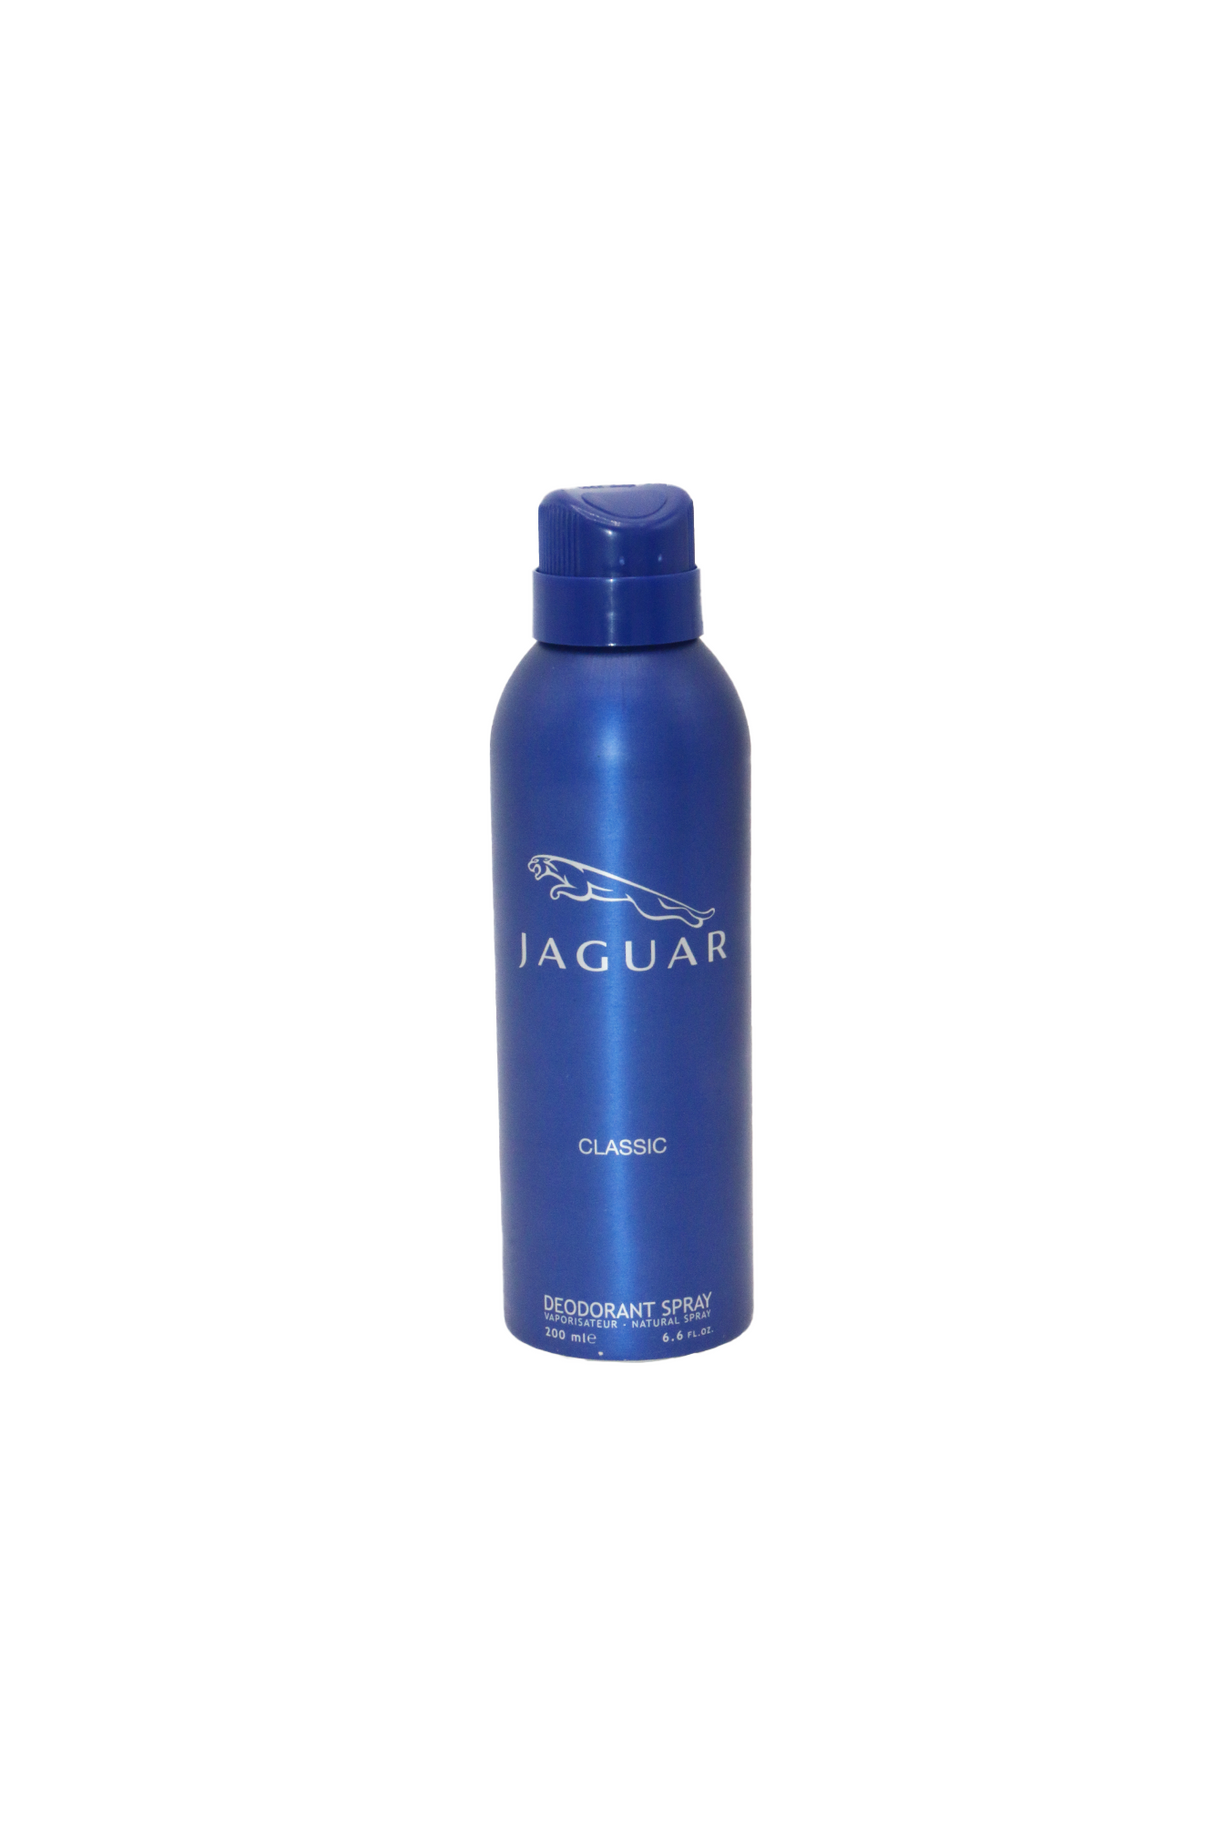 jaguar classic blue deodorant body spray 200ml